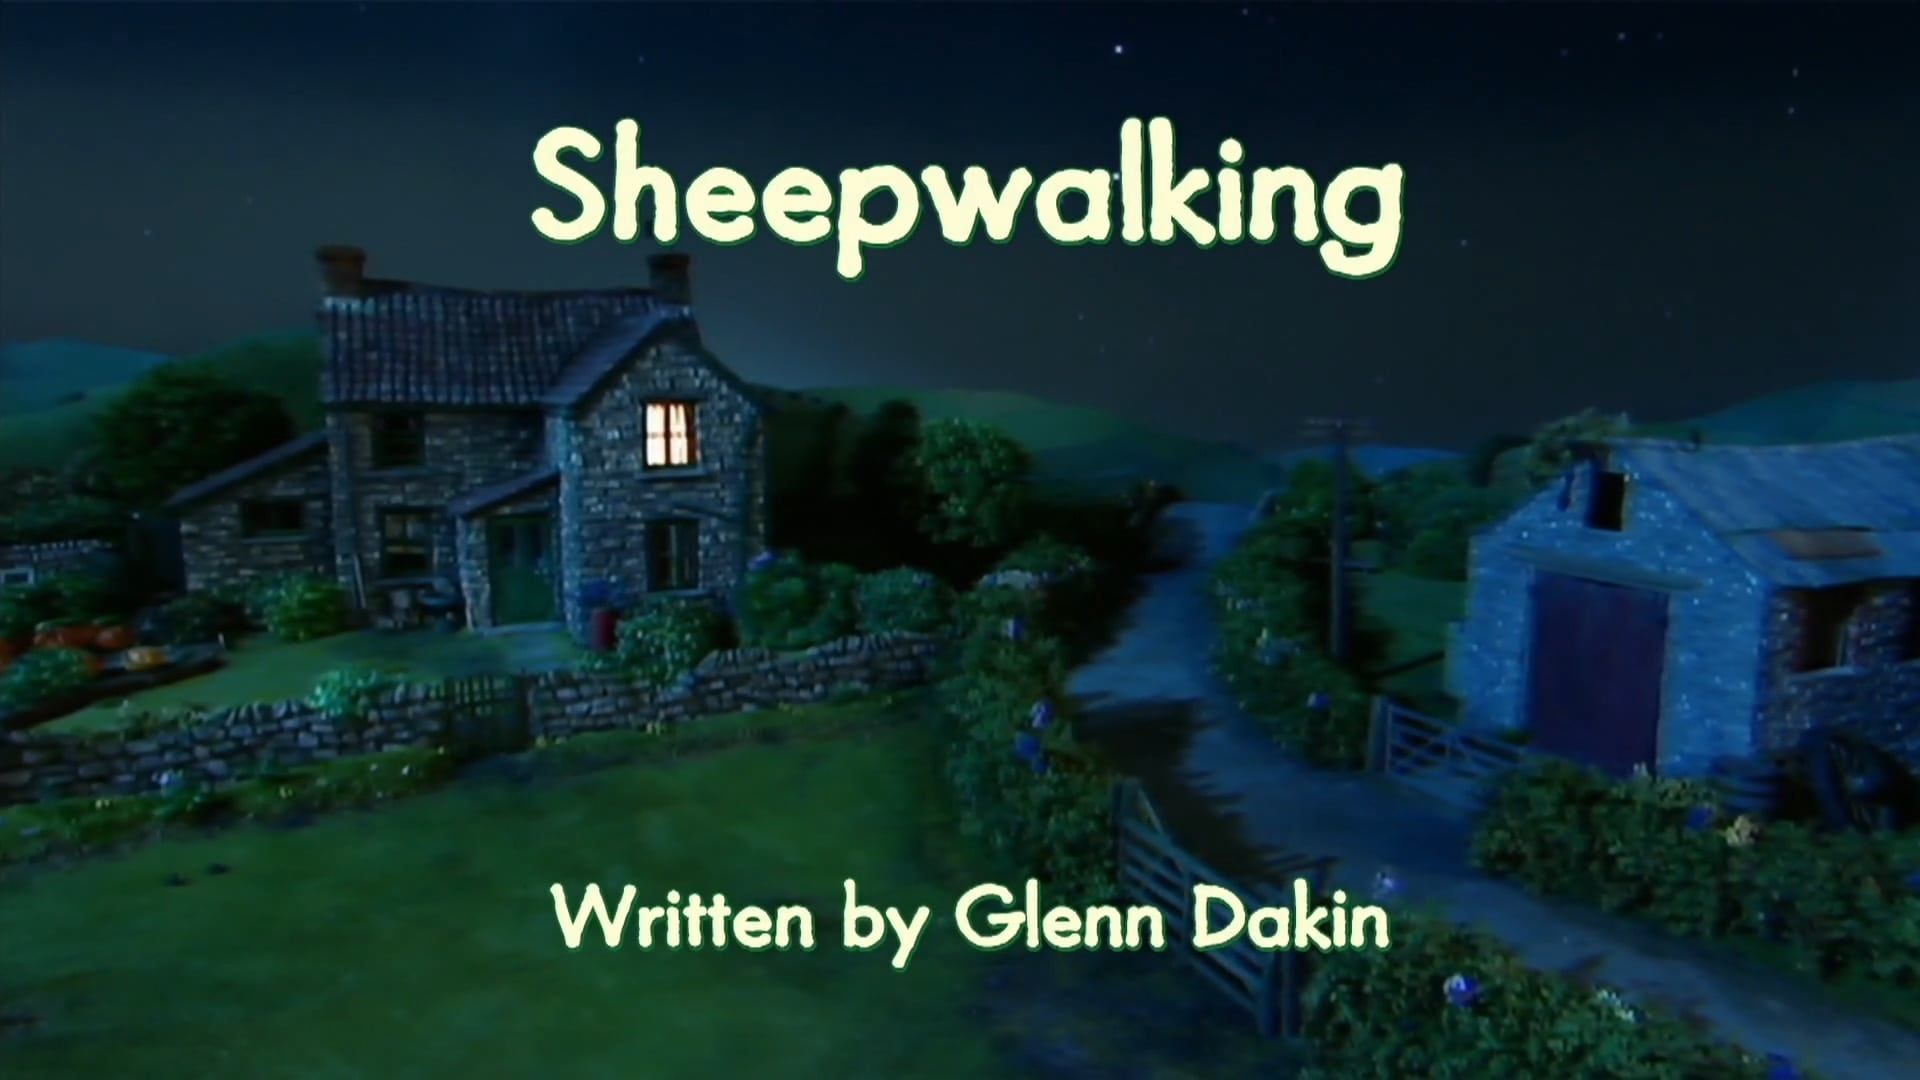 Shaun the Sheep background